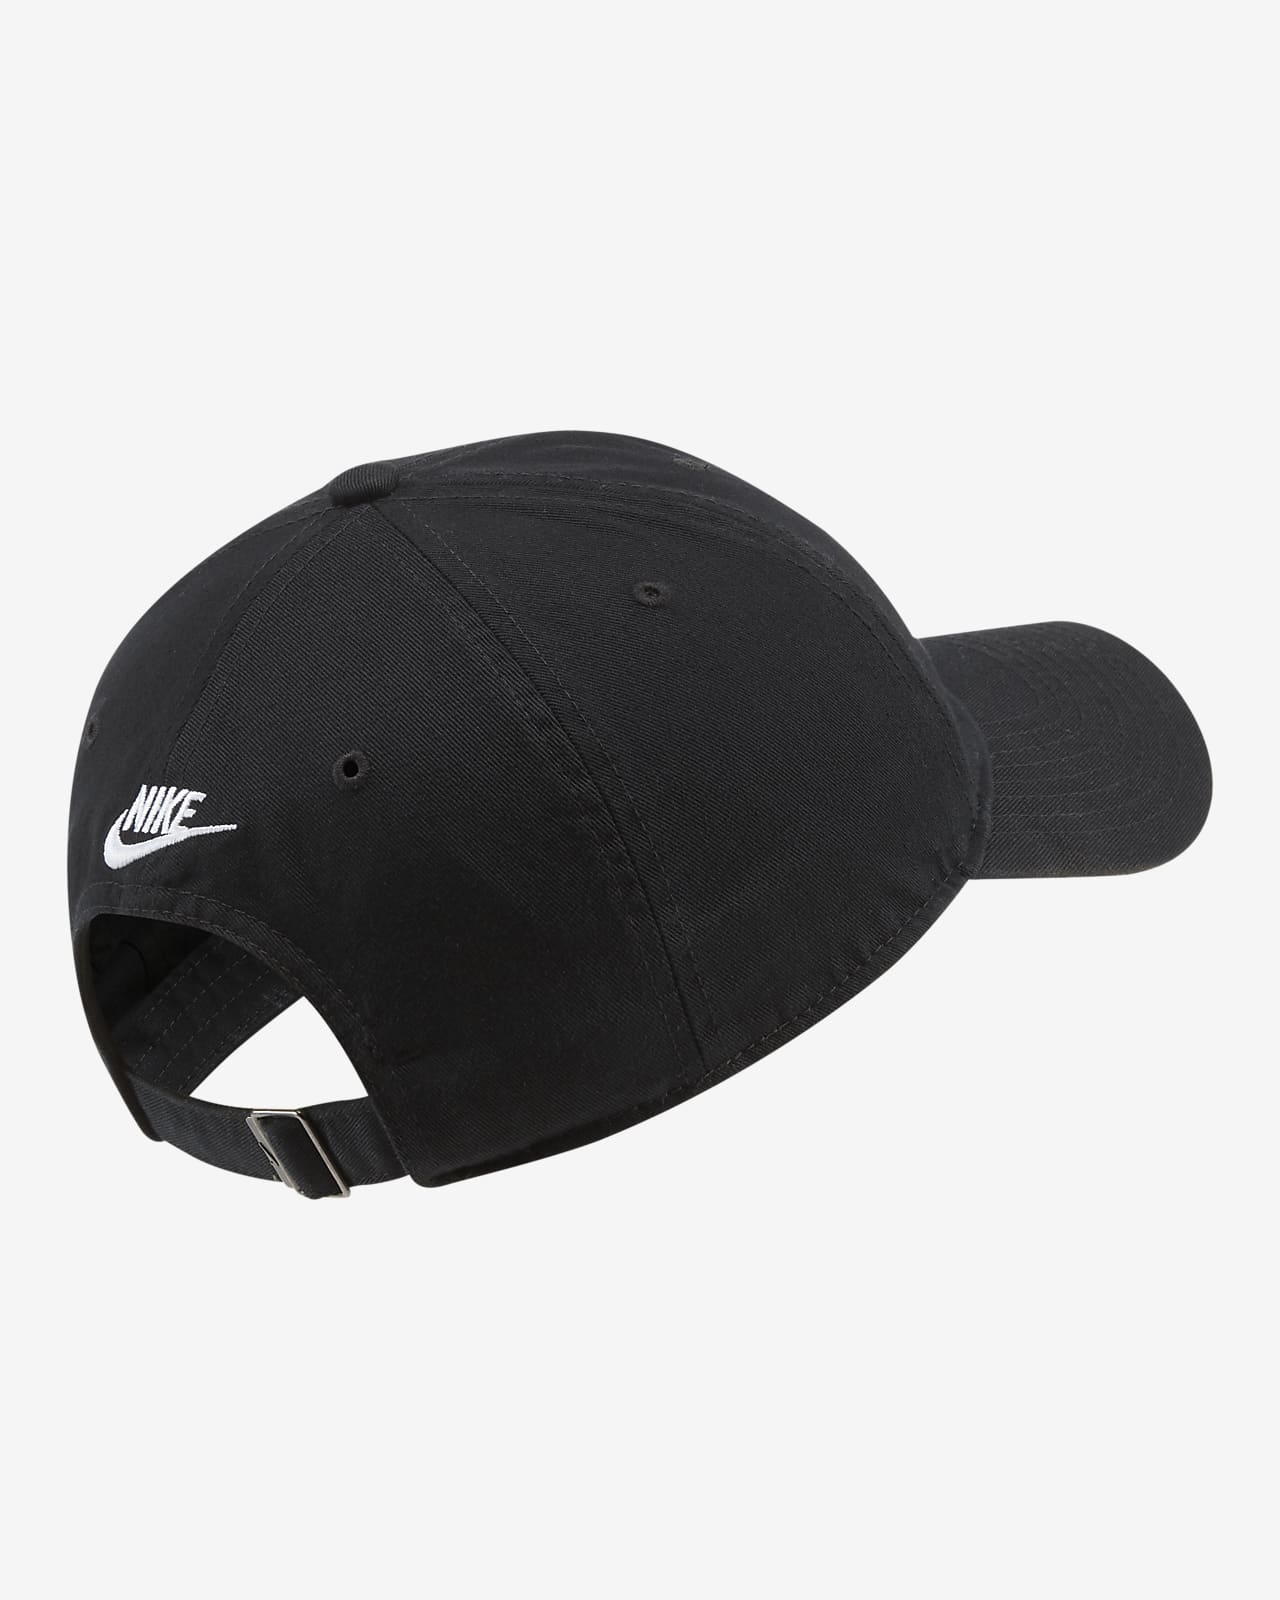 nike sportswear heritage 86 adjustable hat